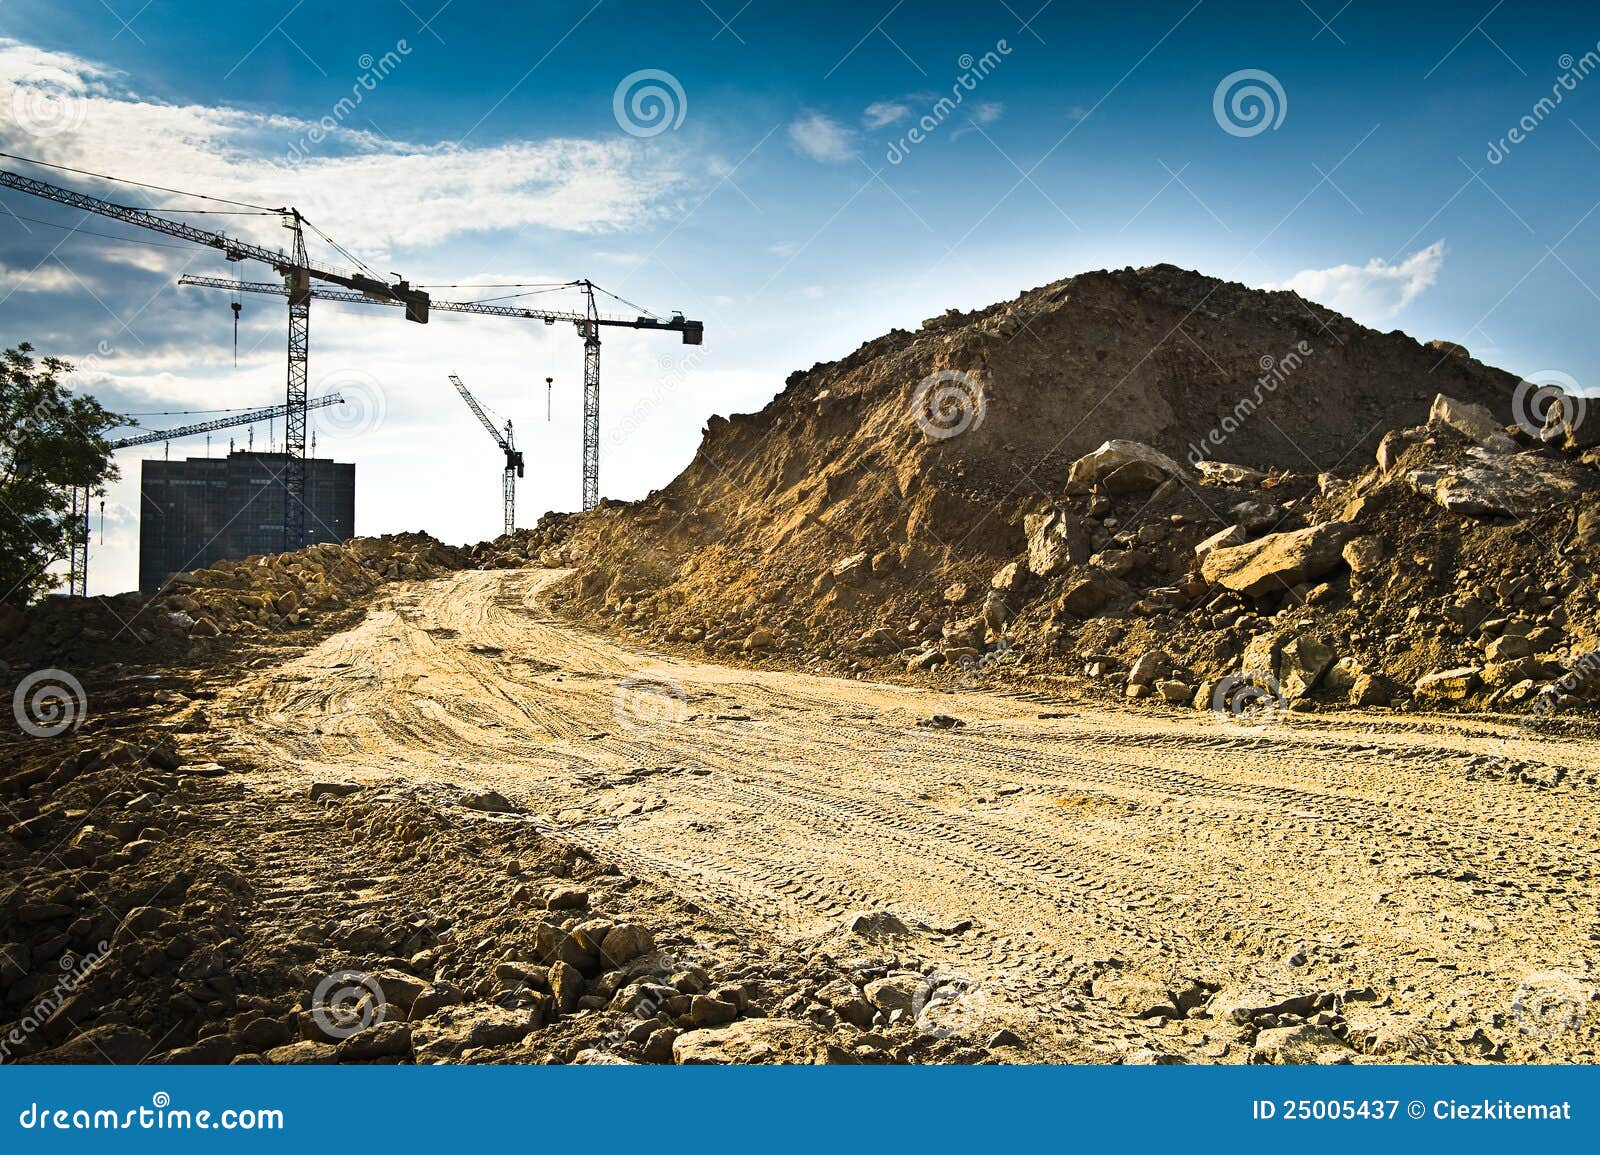 construction cranes at site